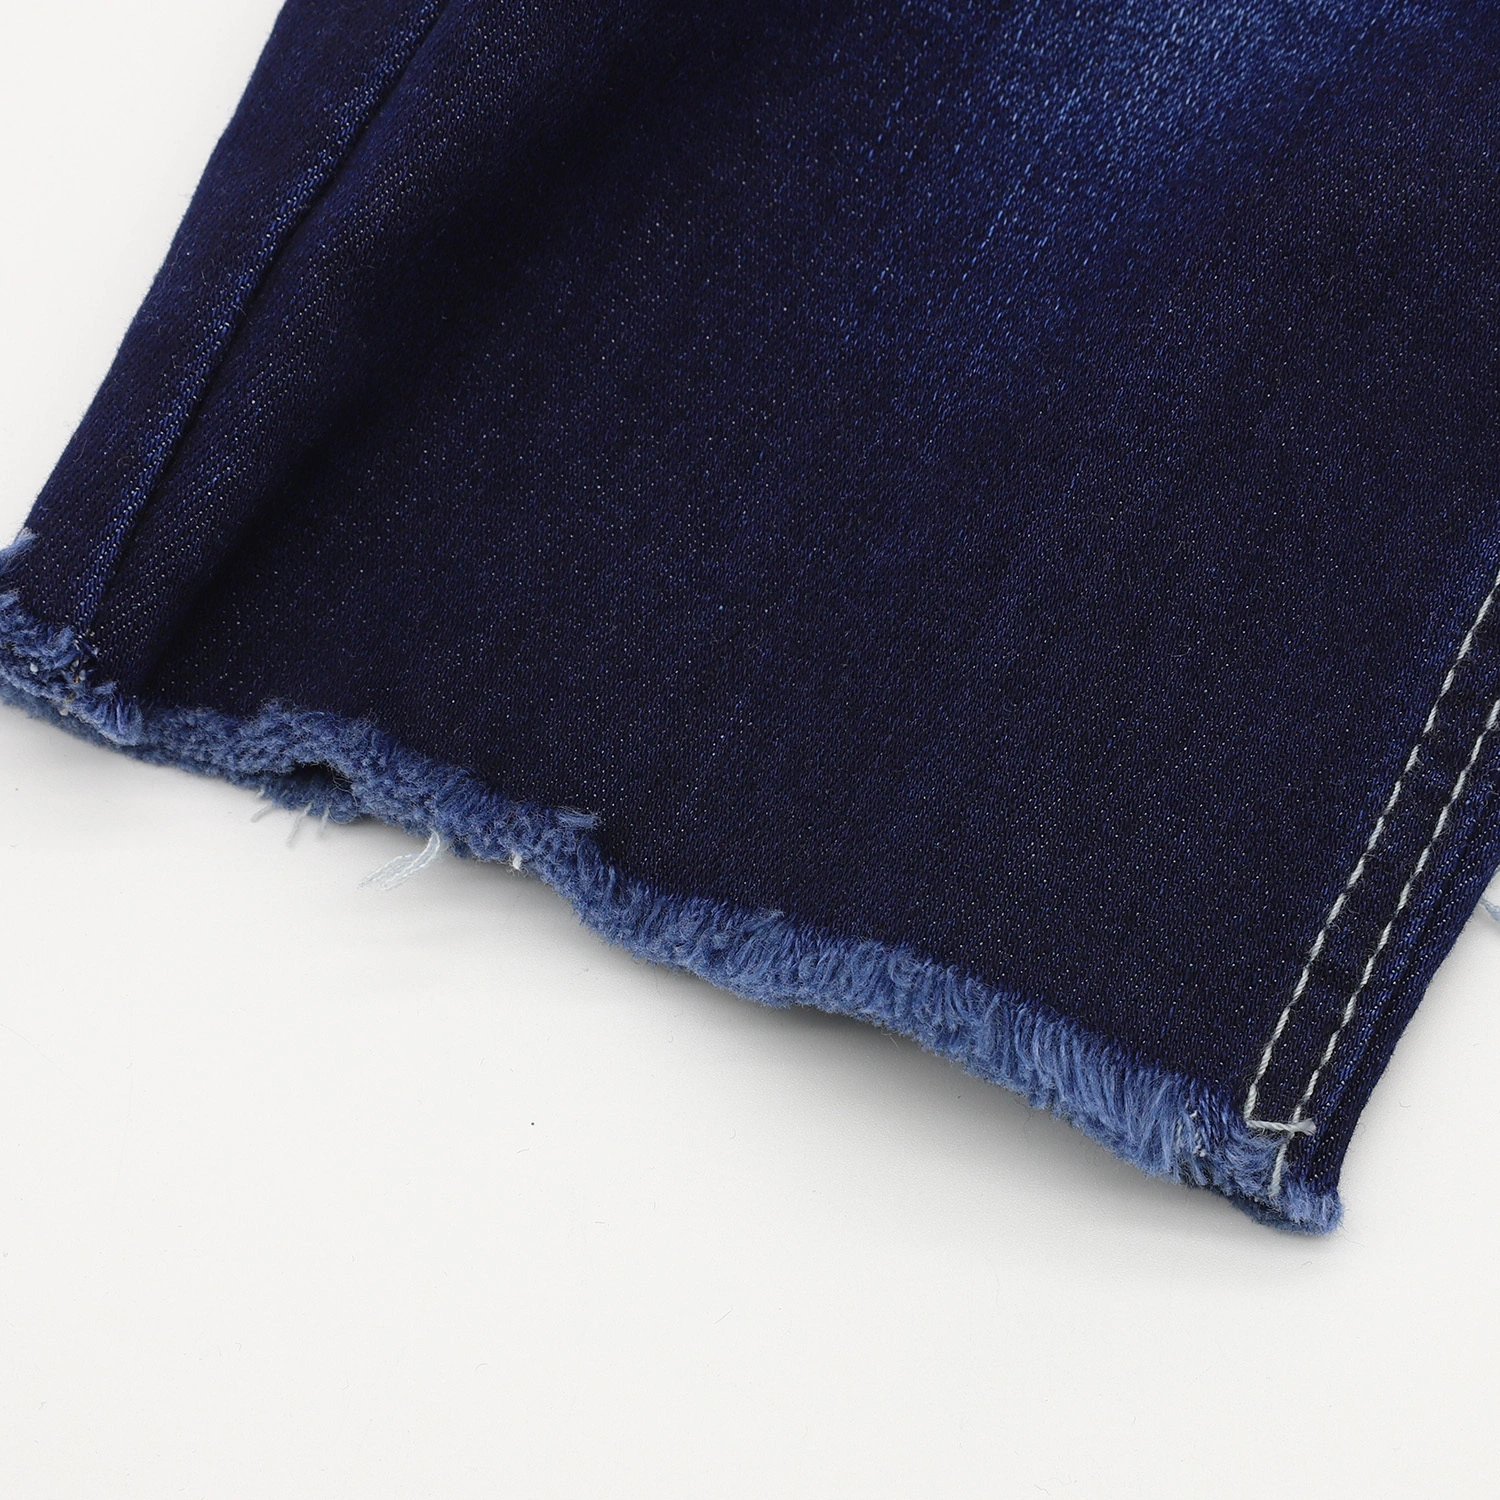 245A-3  12S OA super soft denim fabric with stretch &slub 67%Cotton  28%Poly 3%Viscose 2%Spandex 8